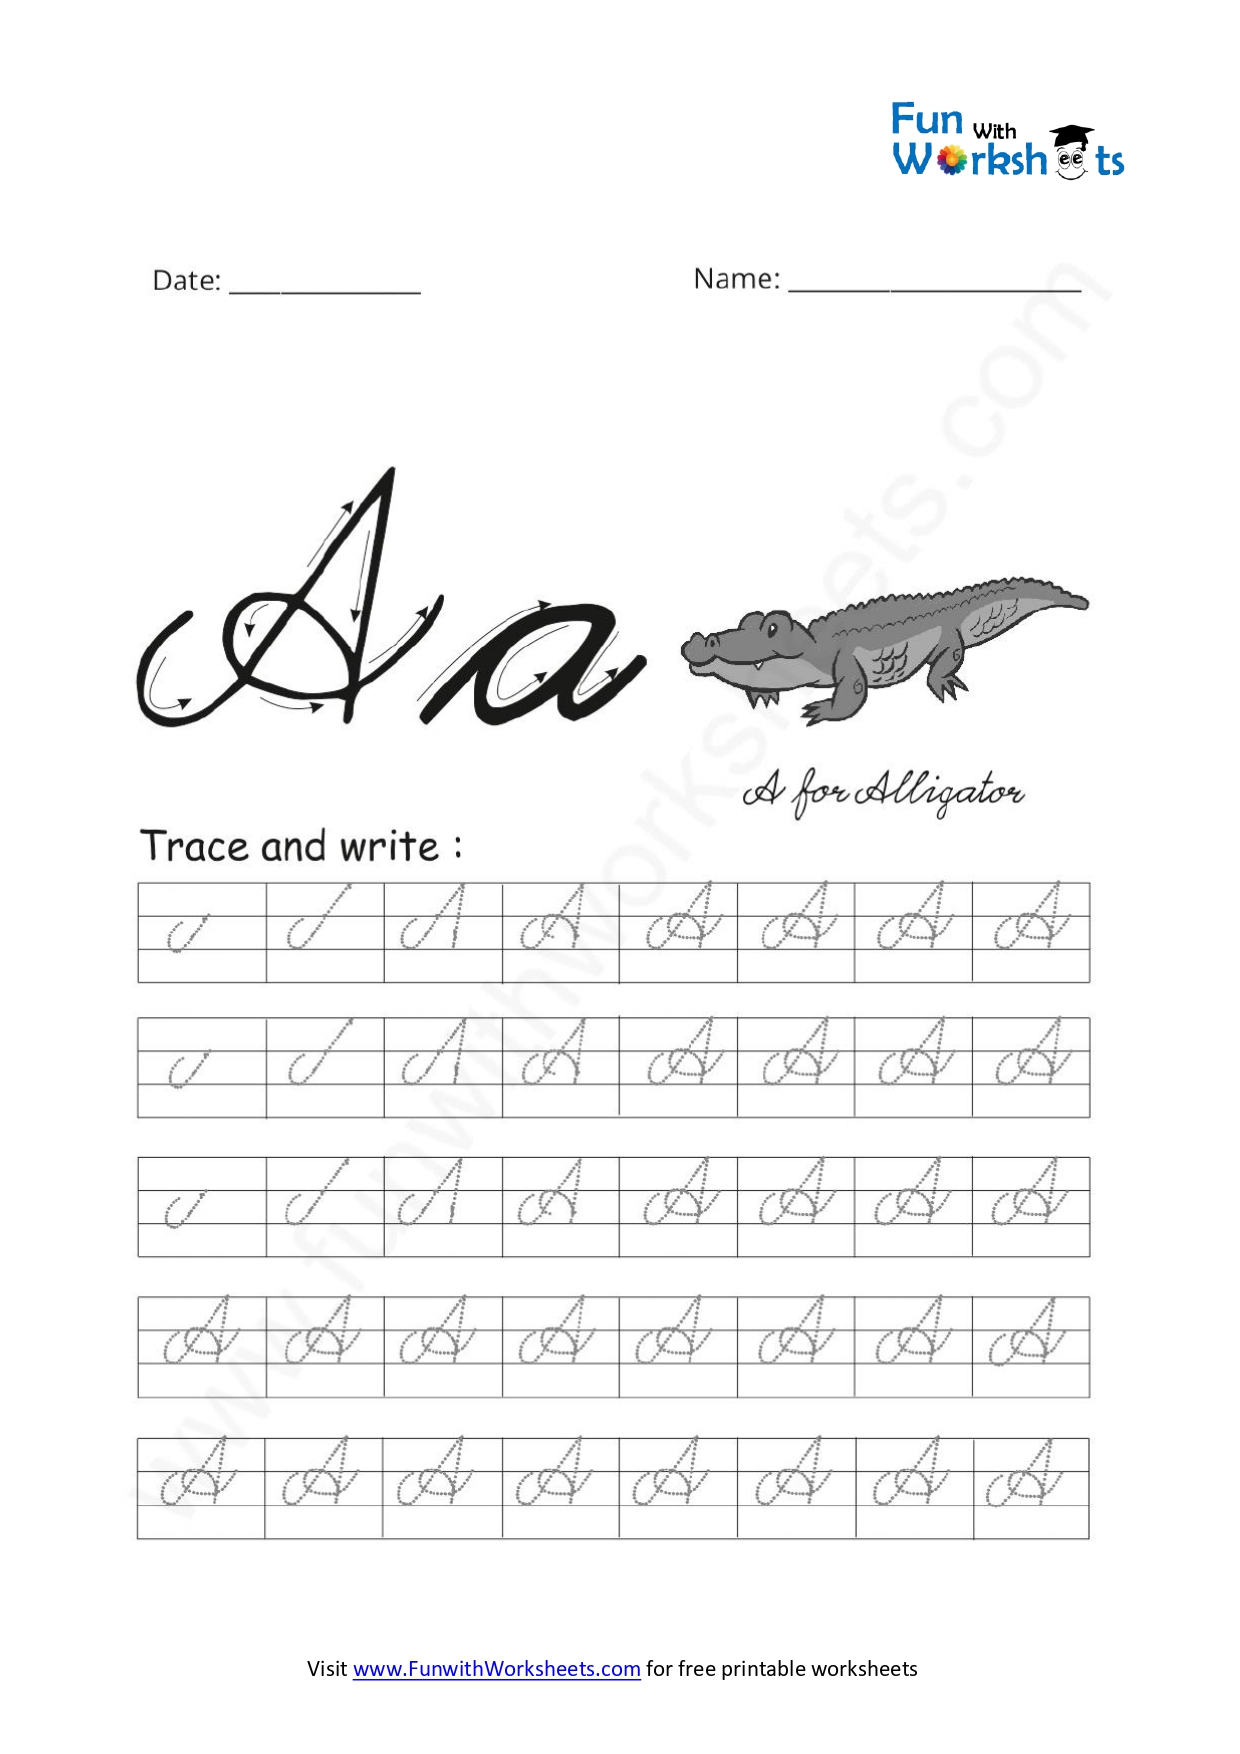 free-a-z-capital-cursive-handwriting-worksheets-suryascursive-com-alphabet-in-cursive-writing